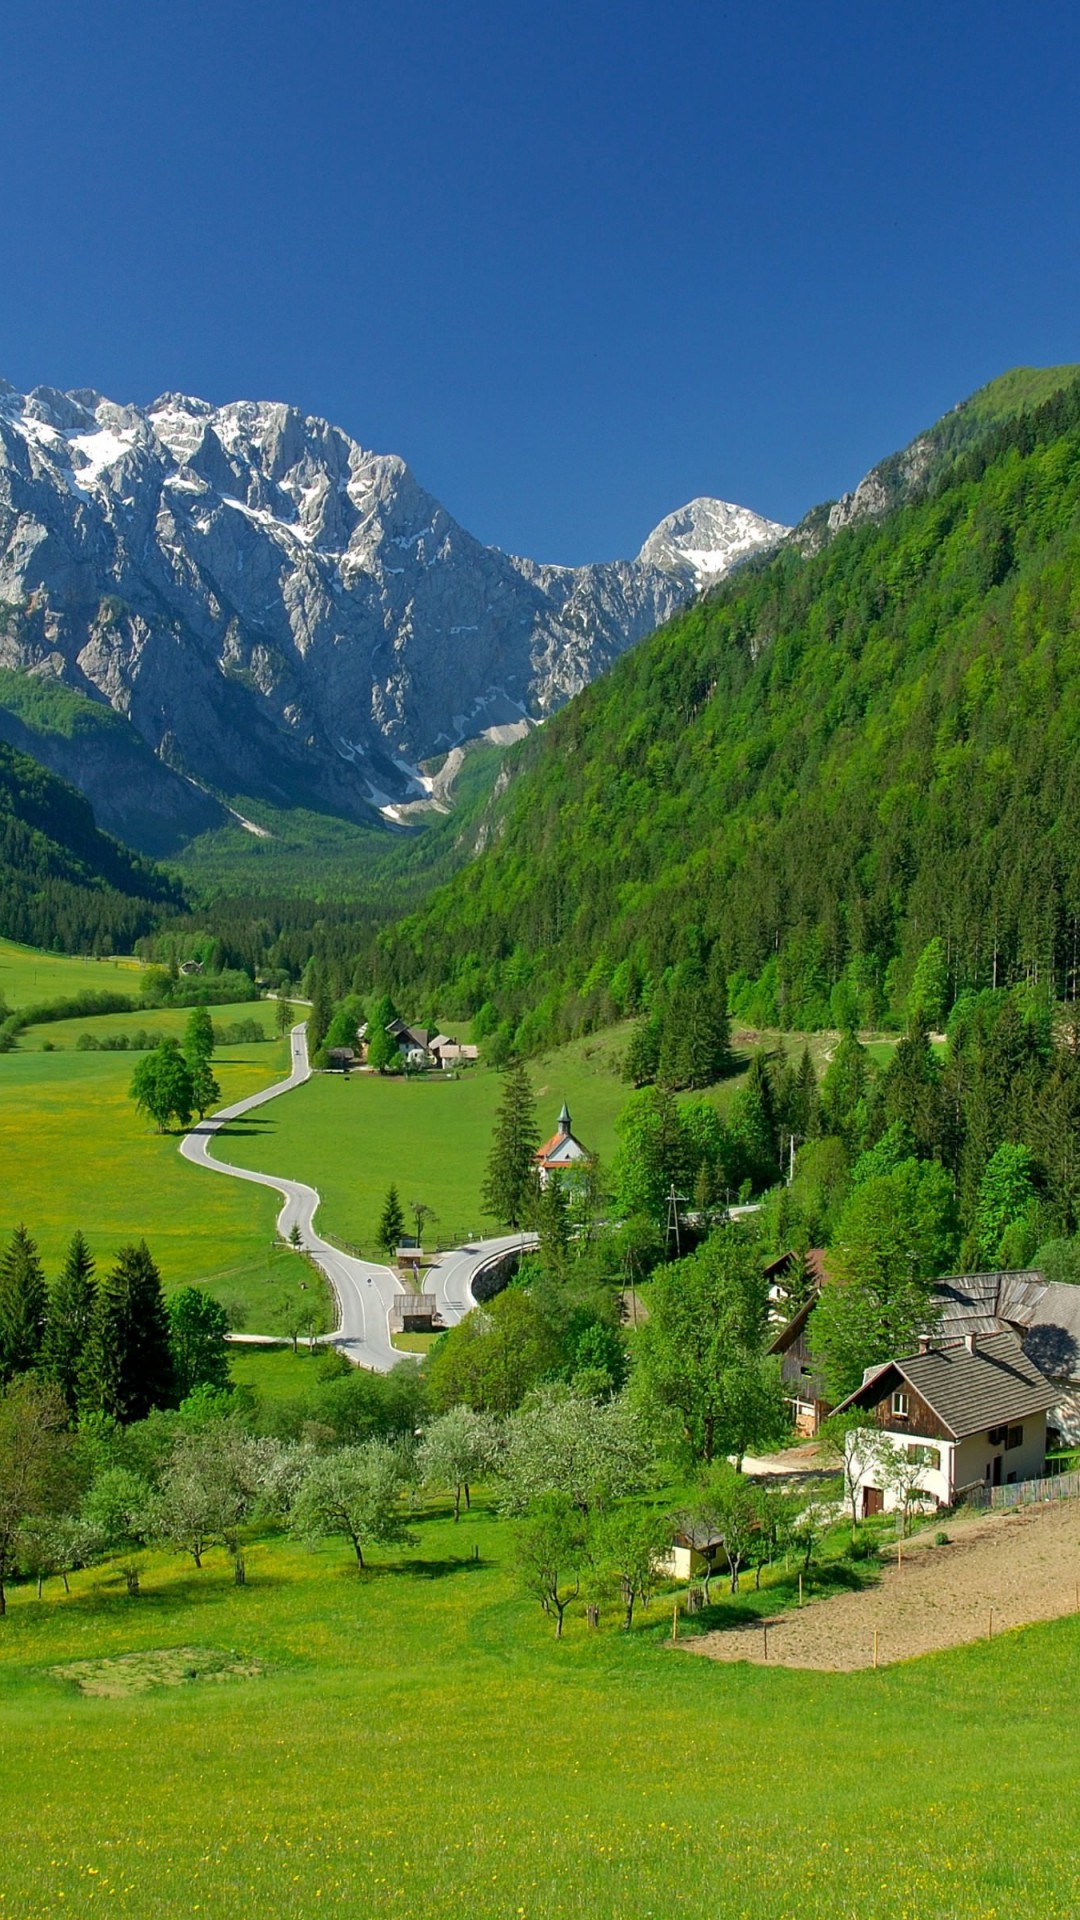 Spring In The Alpine Valley Wallpaper for Google Nexus 5X